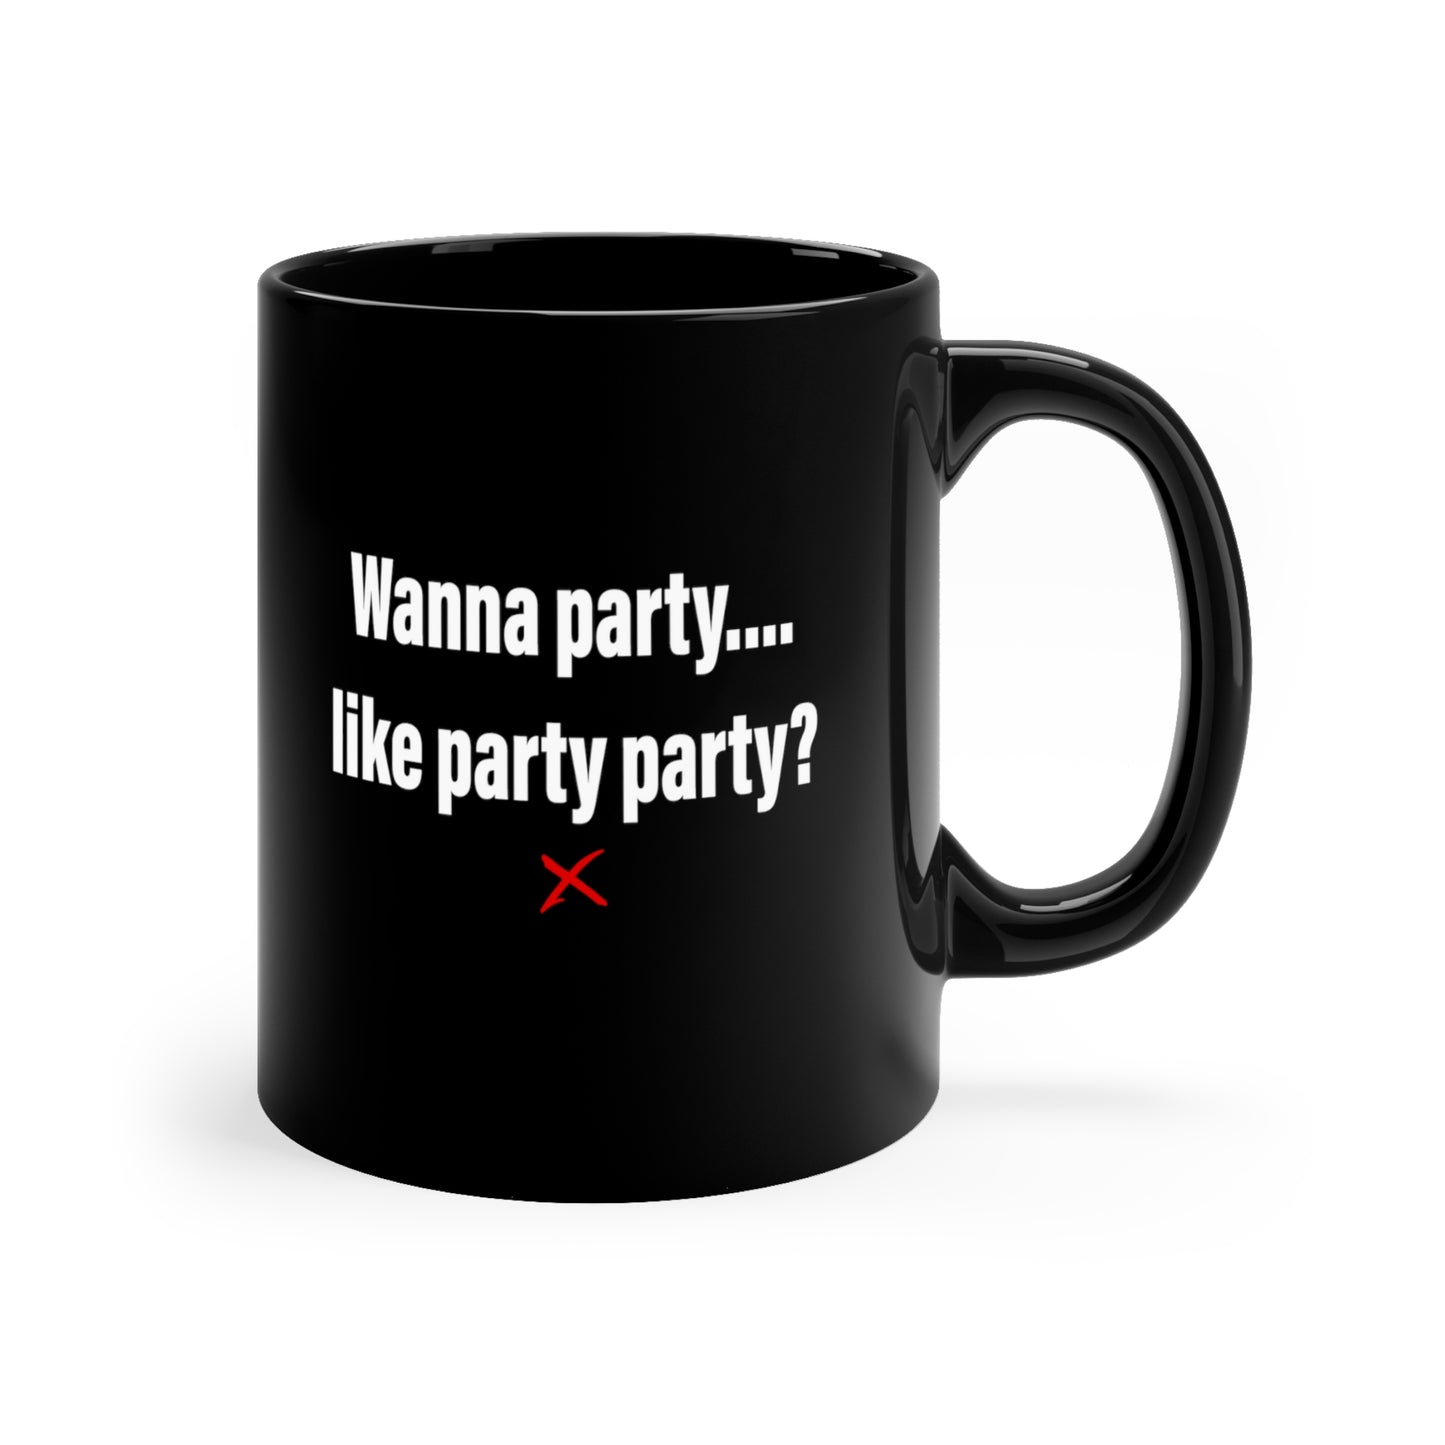 Wanna party.... like party party? - Mug